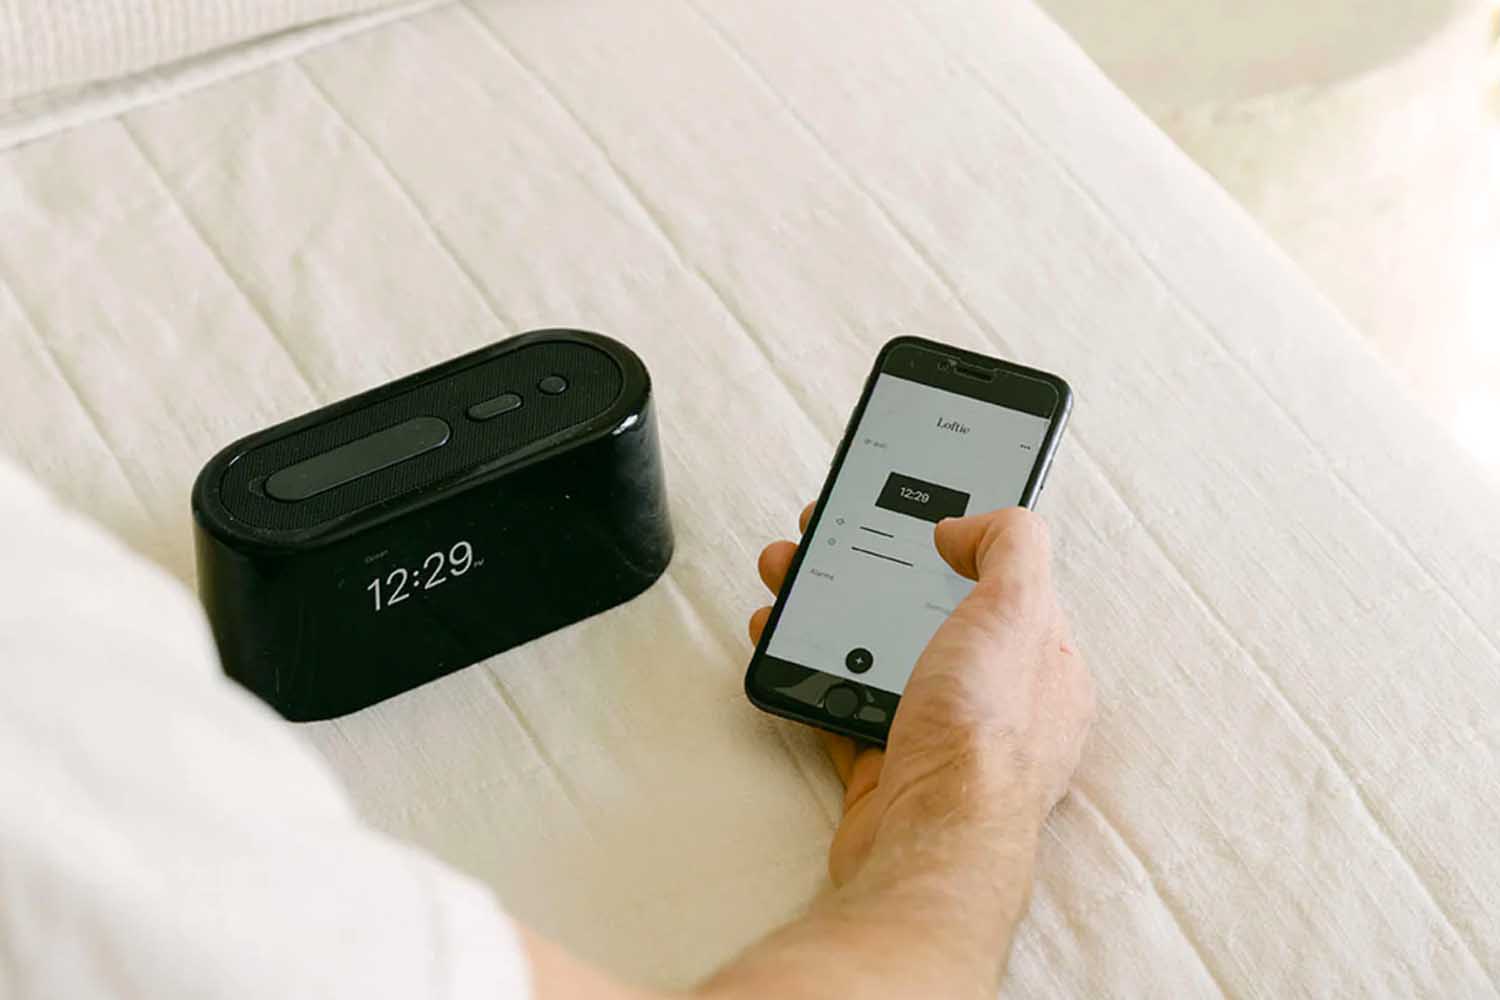 The Loftie alarm clock and app.